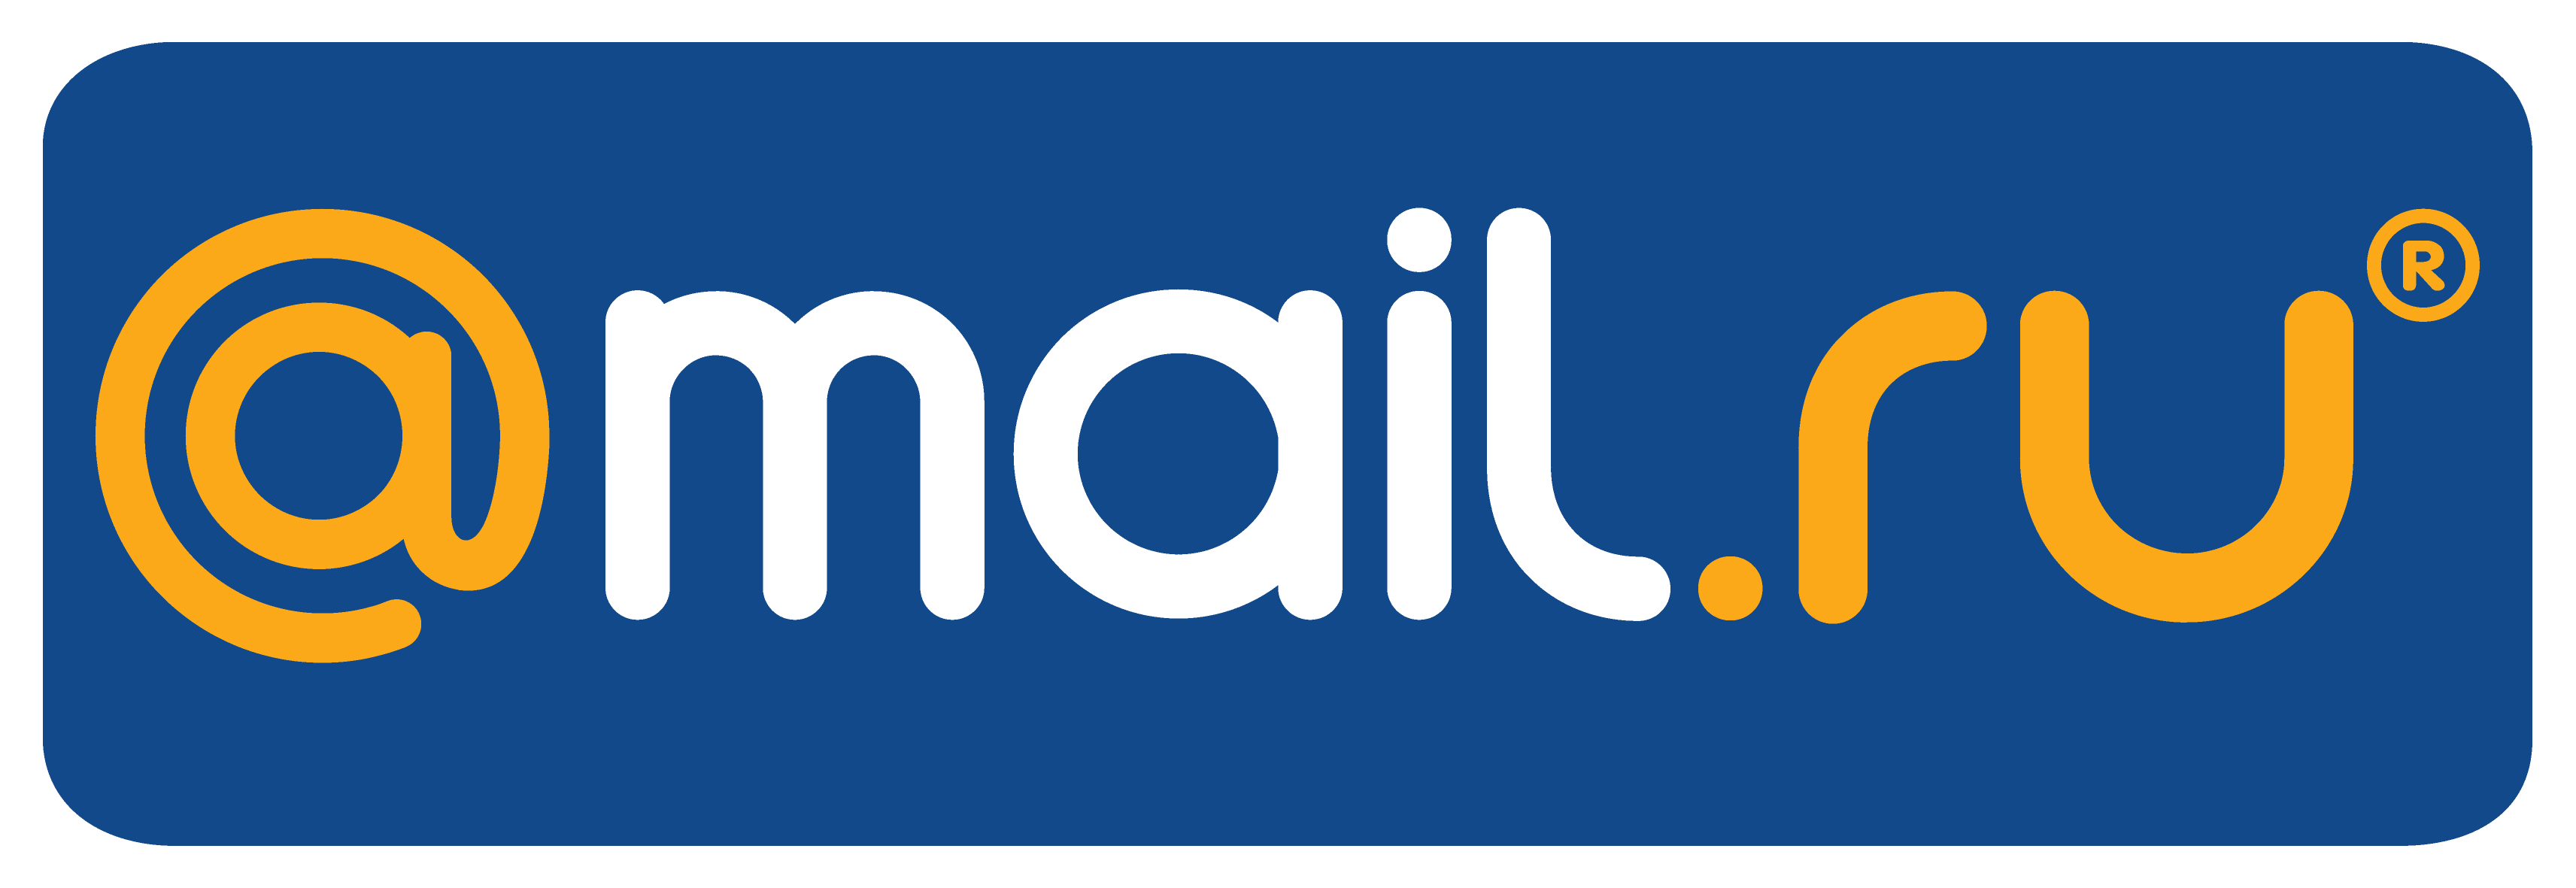 Southshow ru. Mail. Mail.ru лого. Почта майл. Логотип мейл ру.